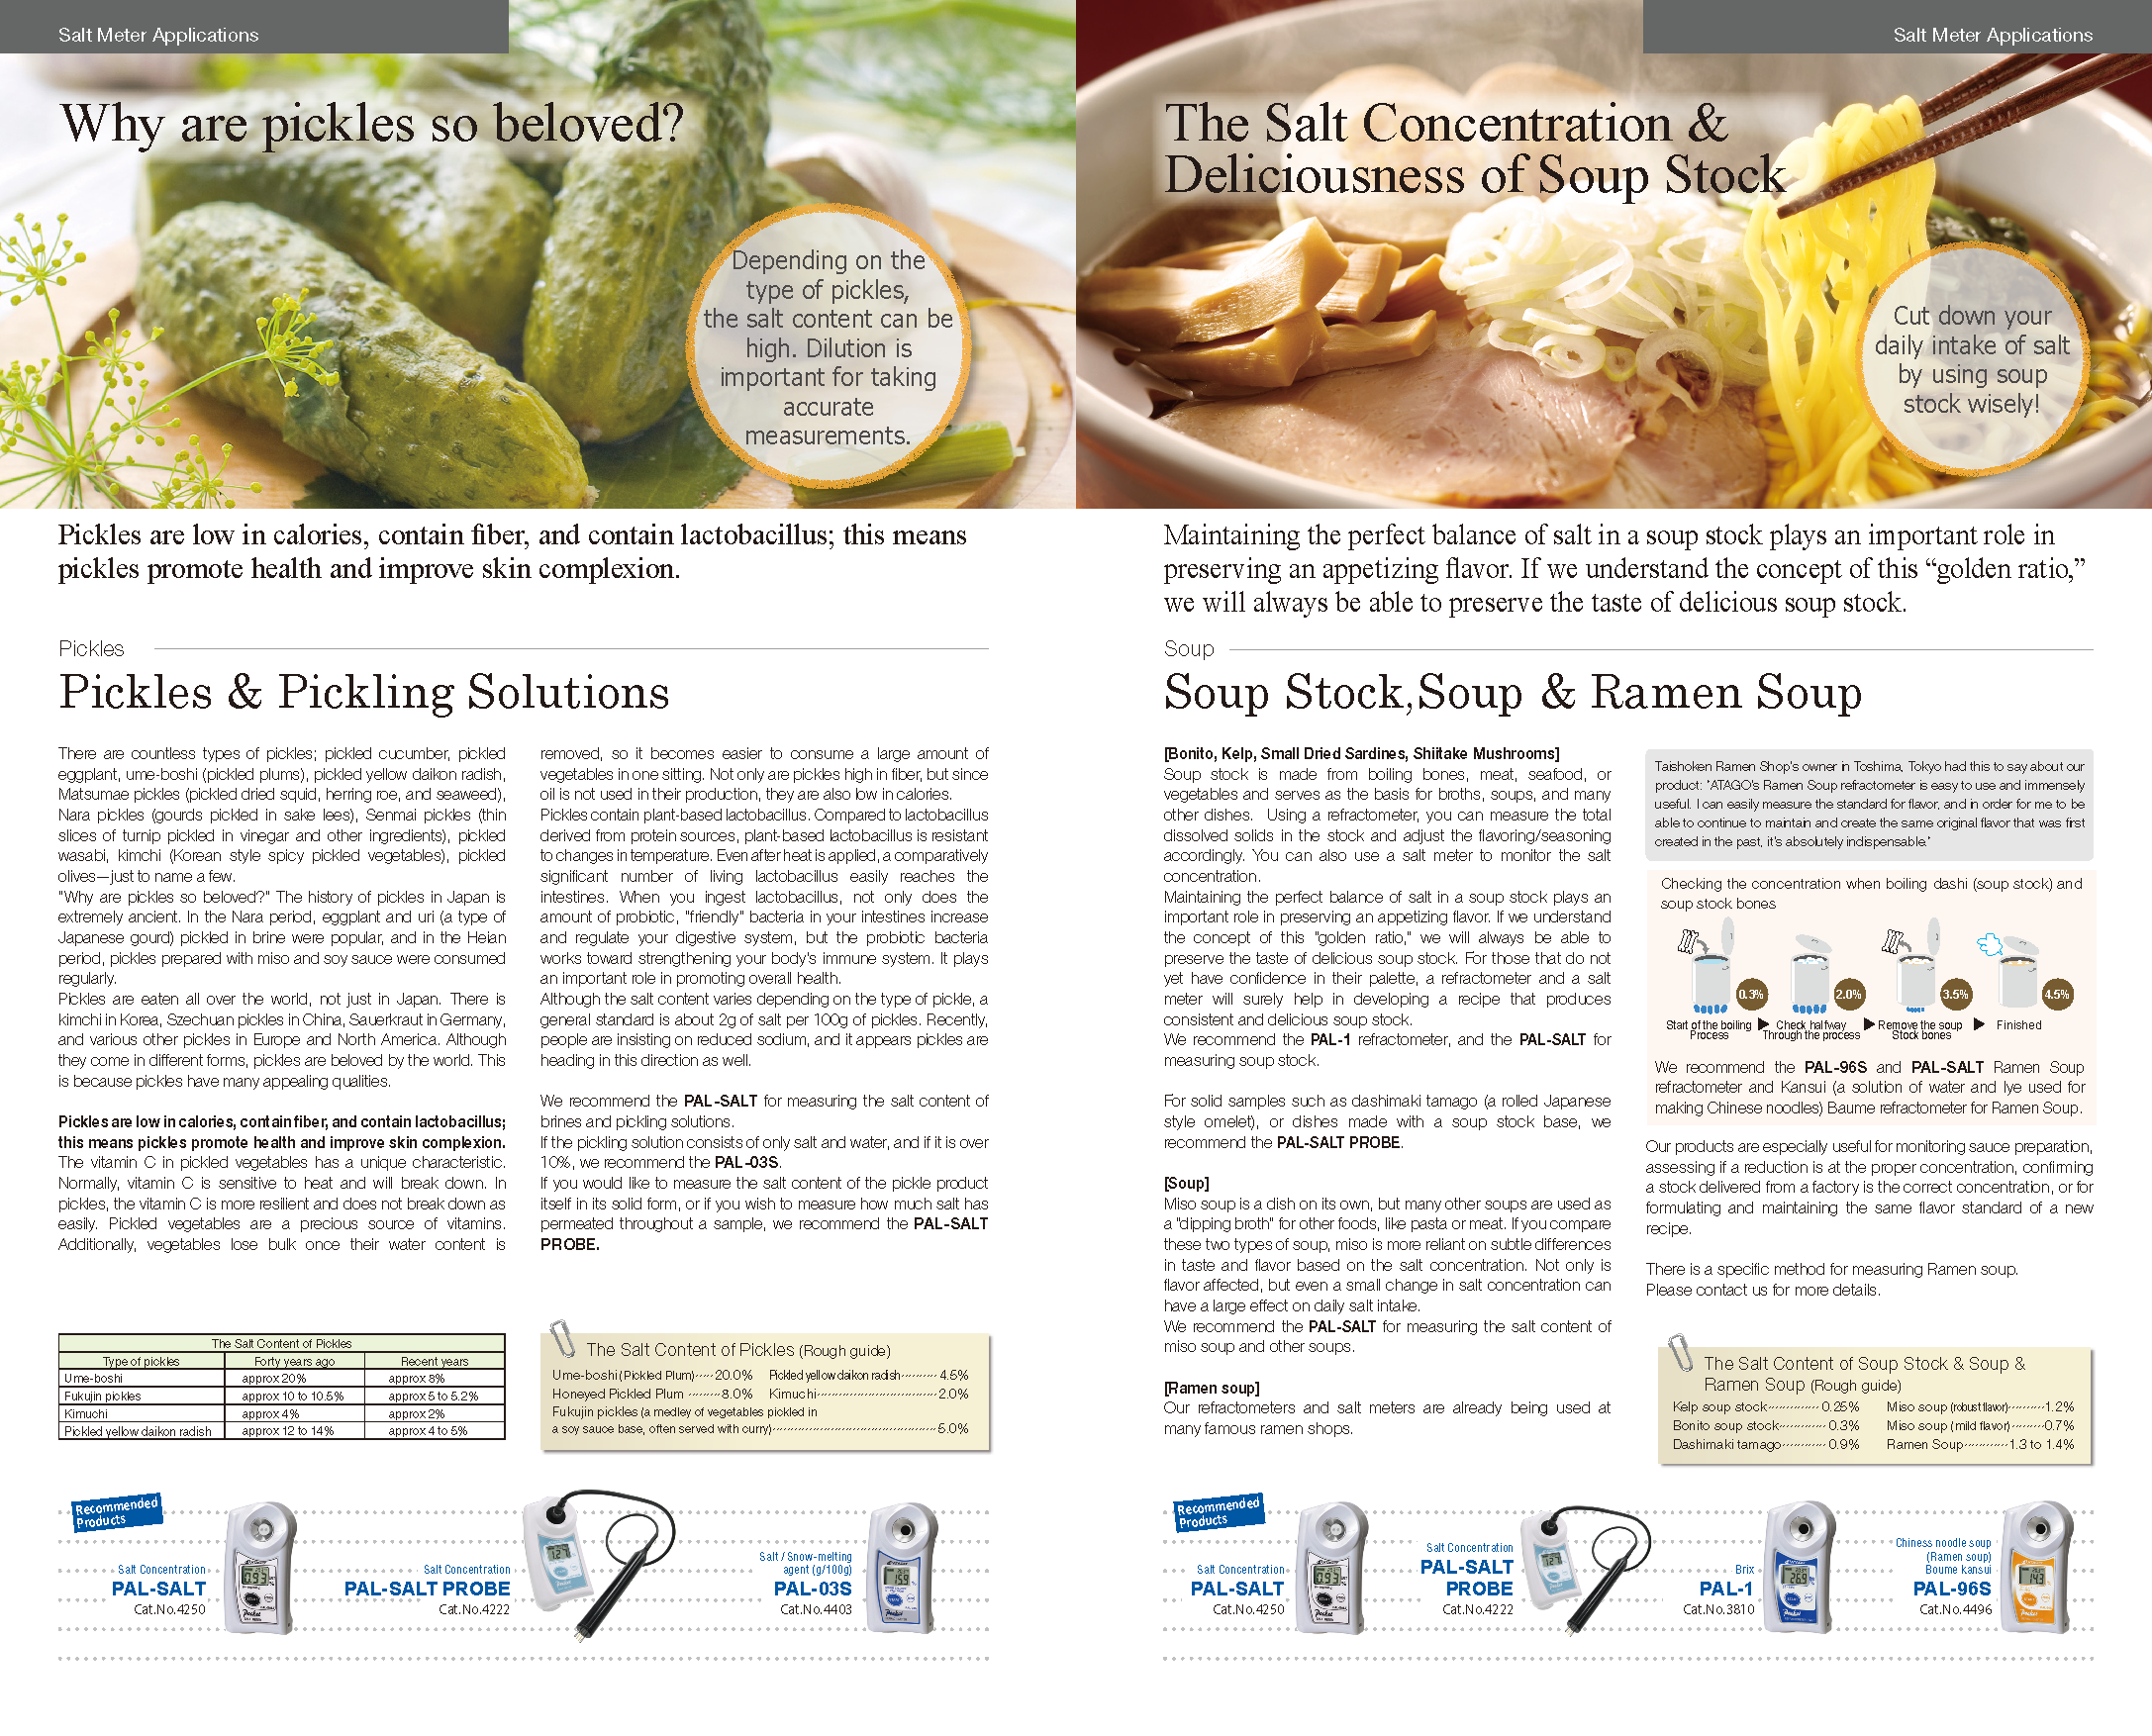 Pickles & Pickling Solutions / Soup Stock,Soup & Ramen Soup